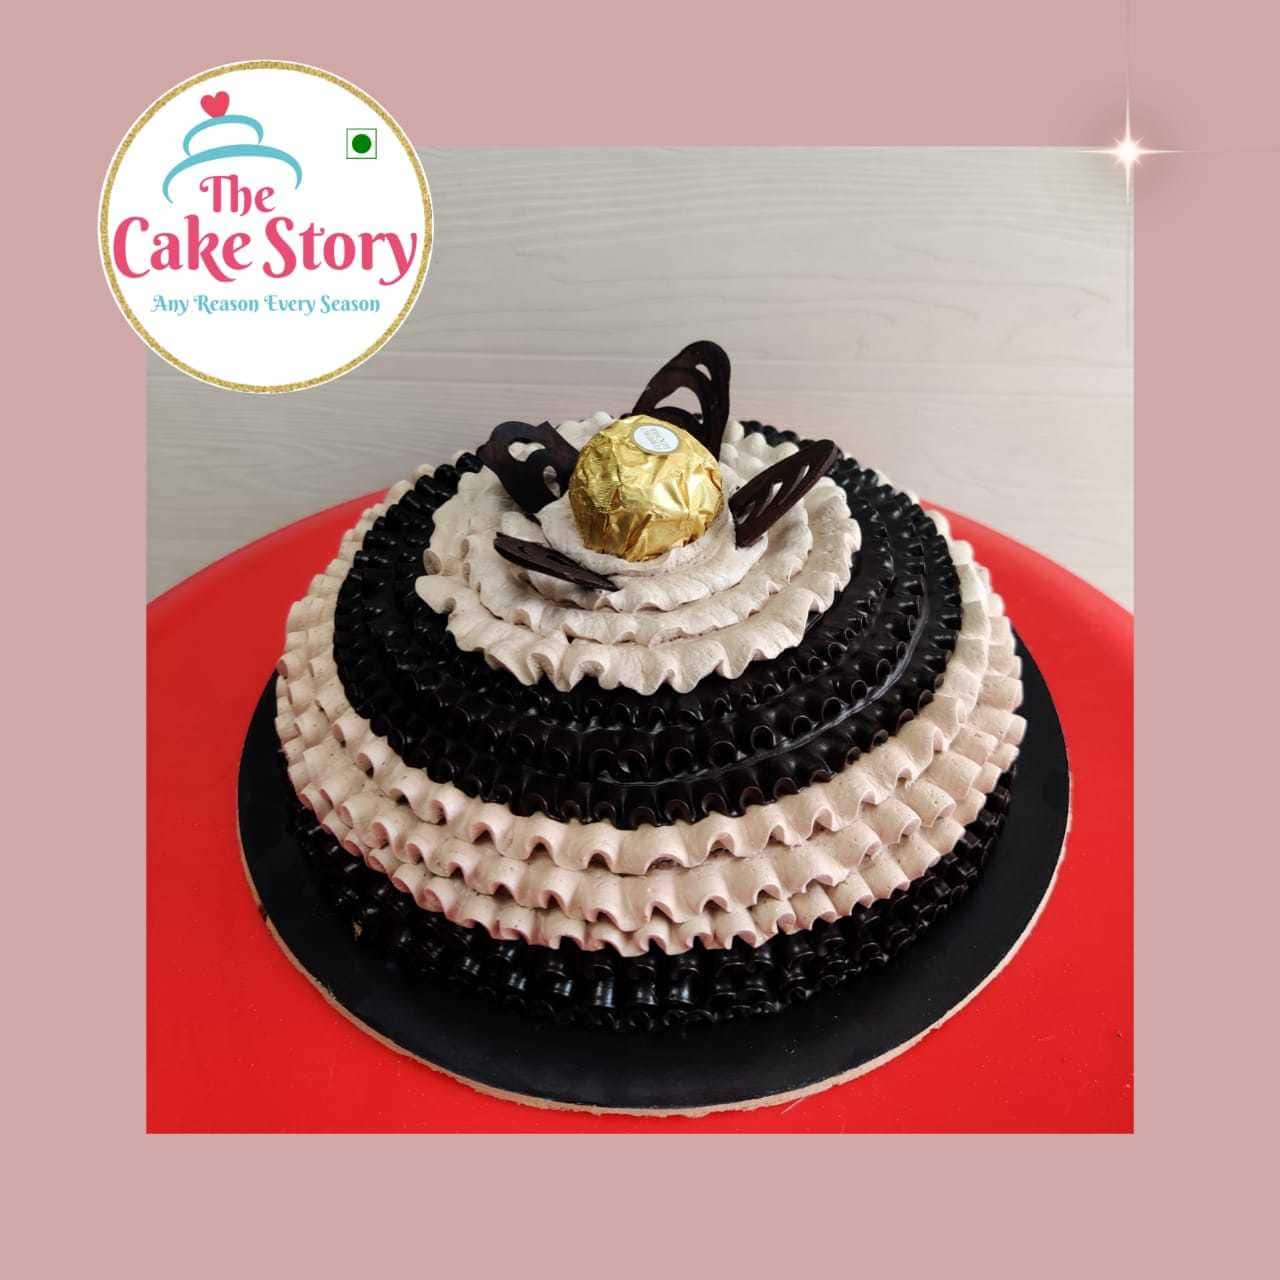 Birthday Cake: Order Birthday Cake Online in India | Theobroma